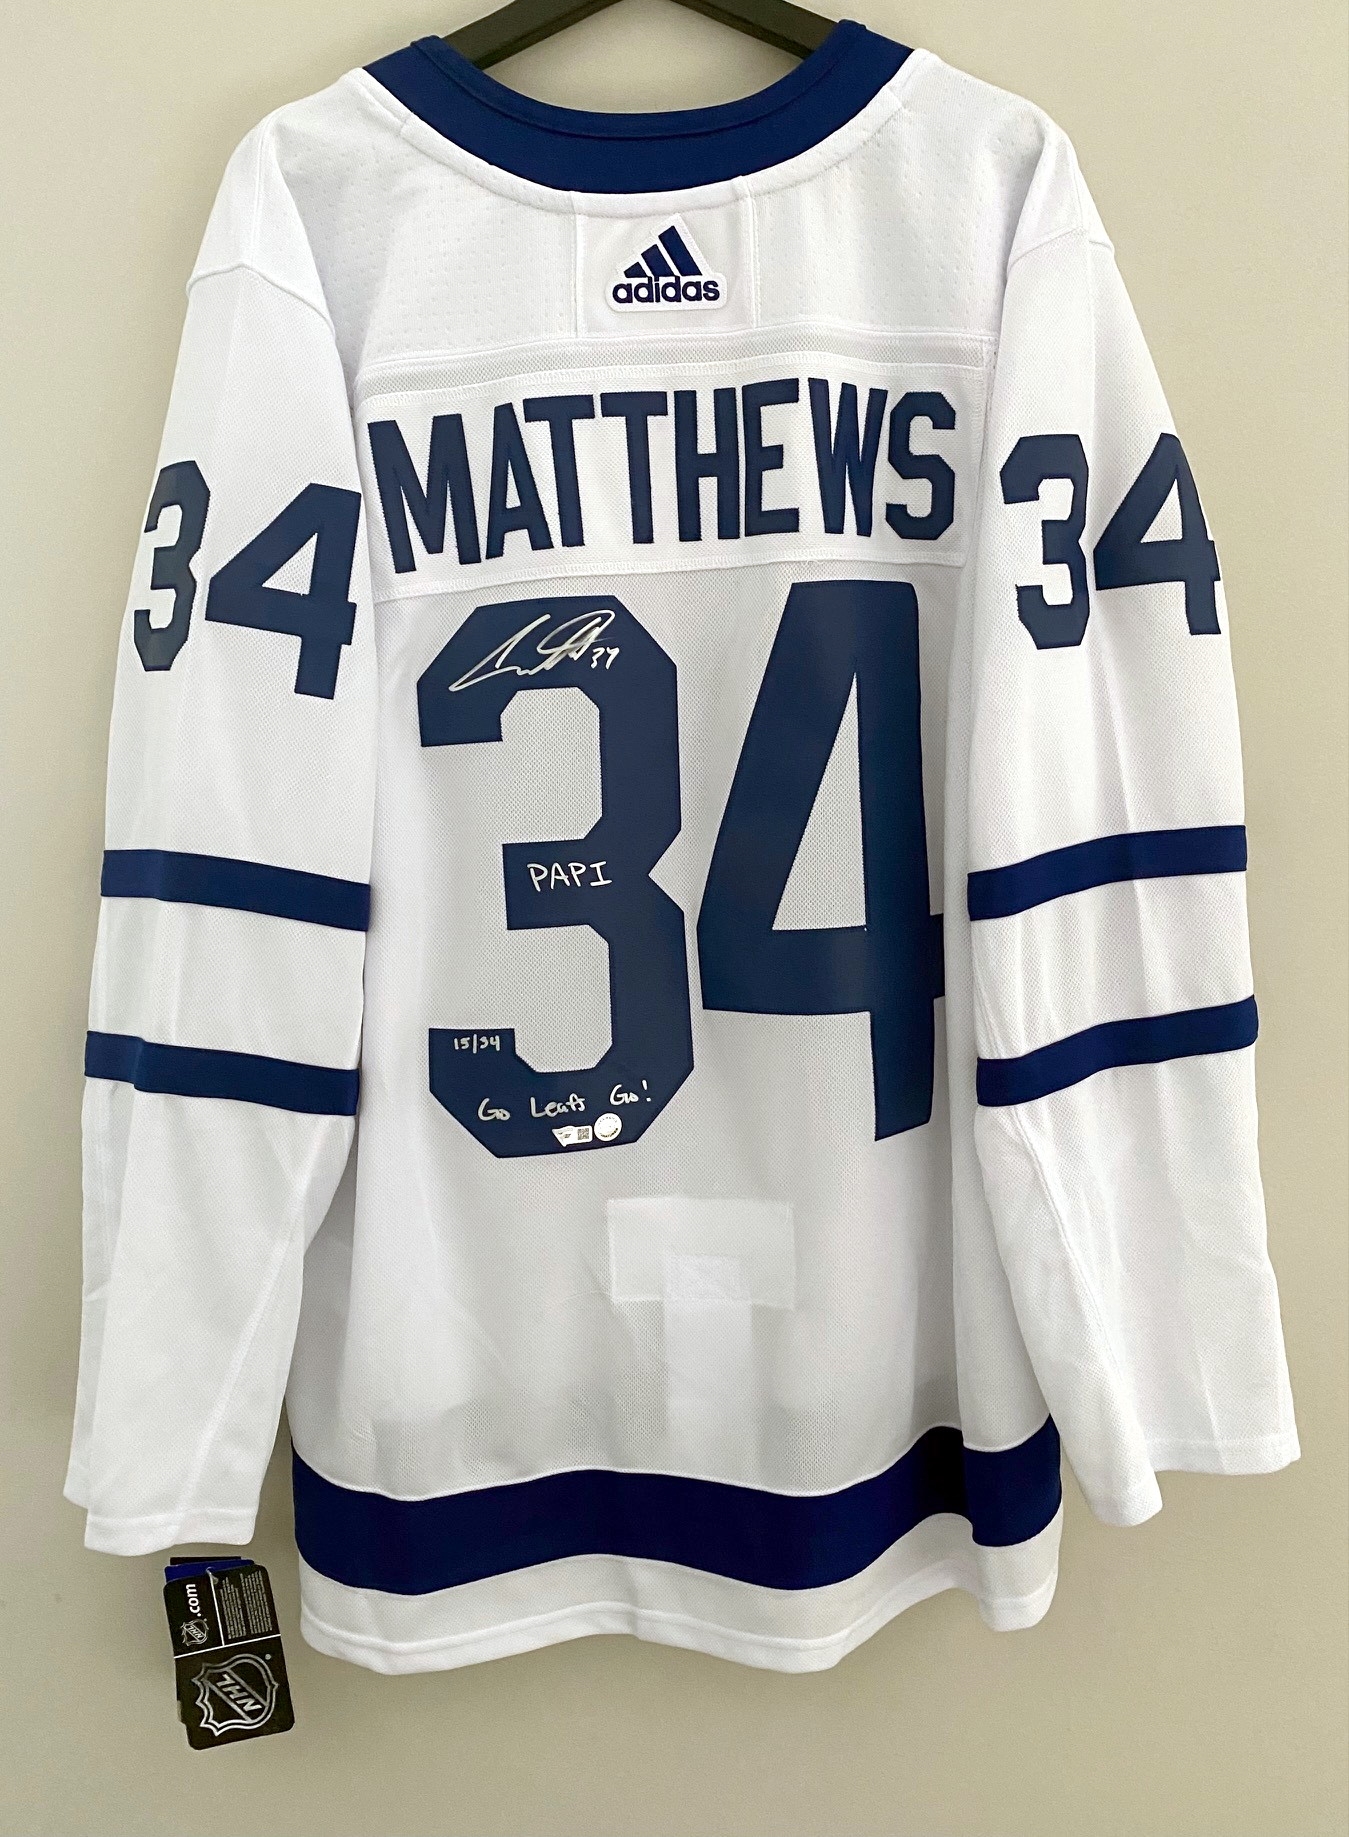 Auston Matthews Toronto Maple Leafs Signed Adidas Jersey with PAPI Go Leafs Go! Note #15/34 - Fanatics